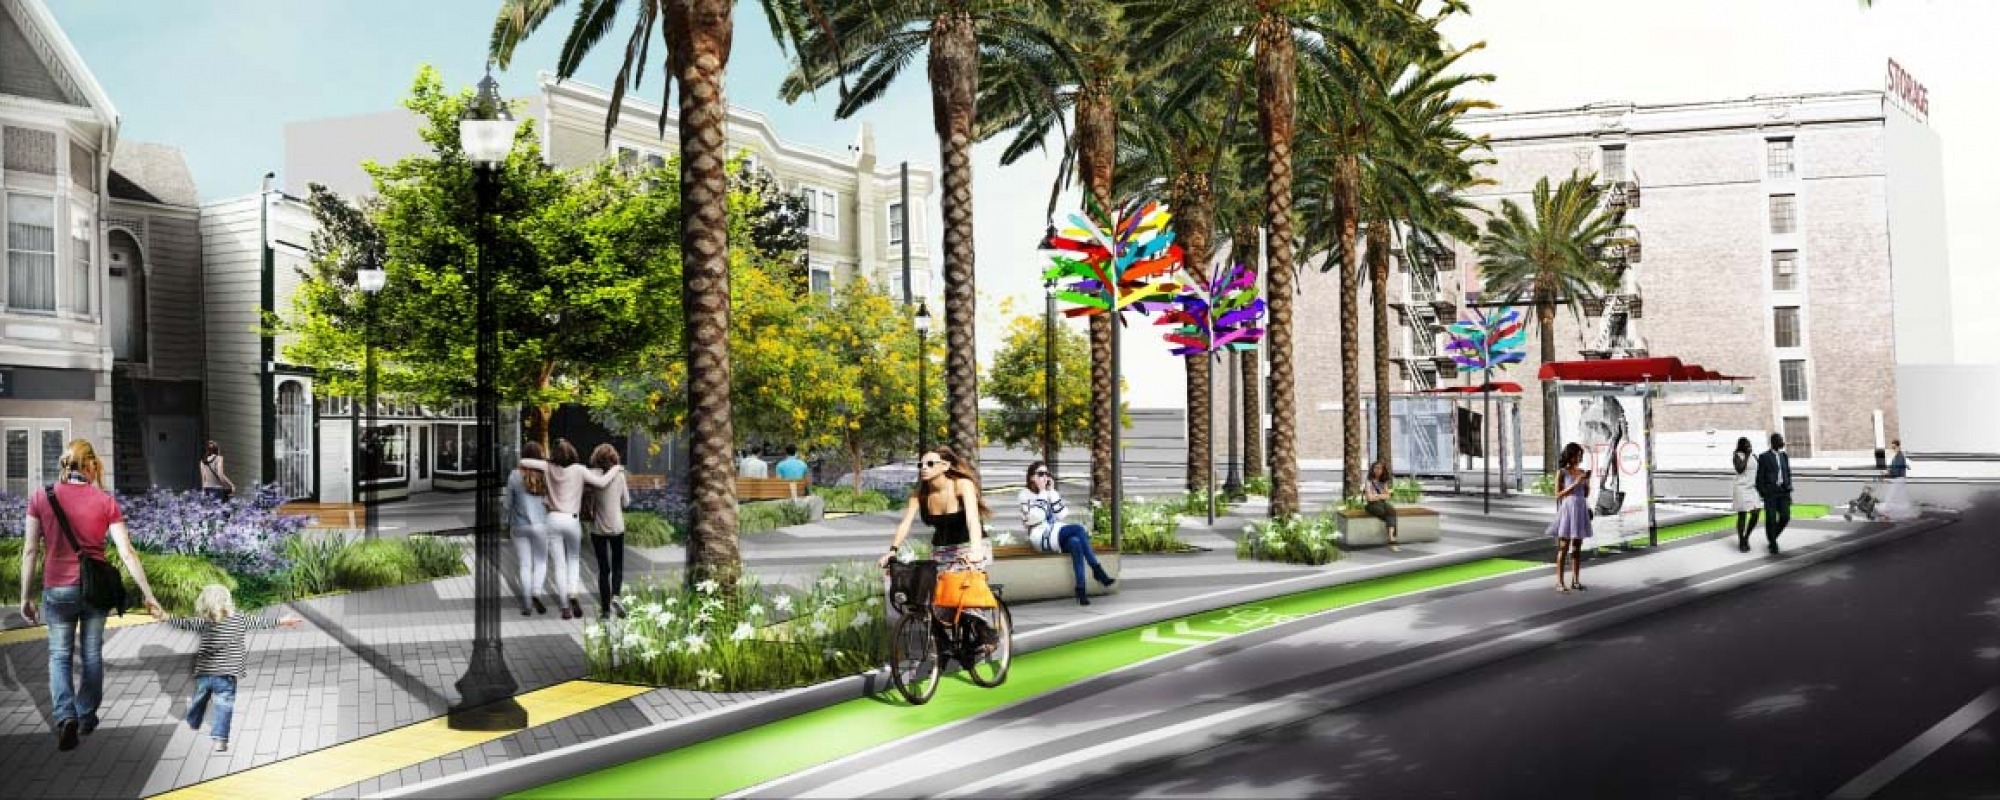 Masonic Avenue Streetscape Improvement Project rendering